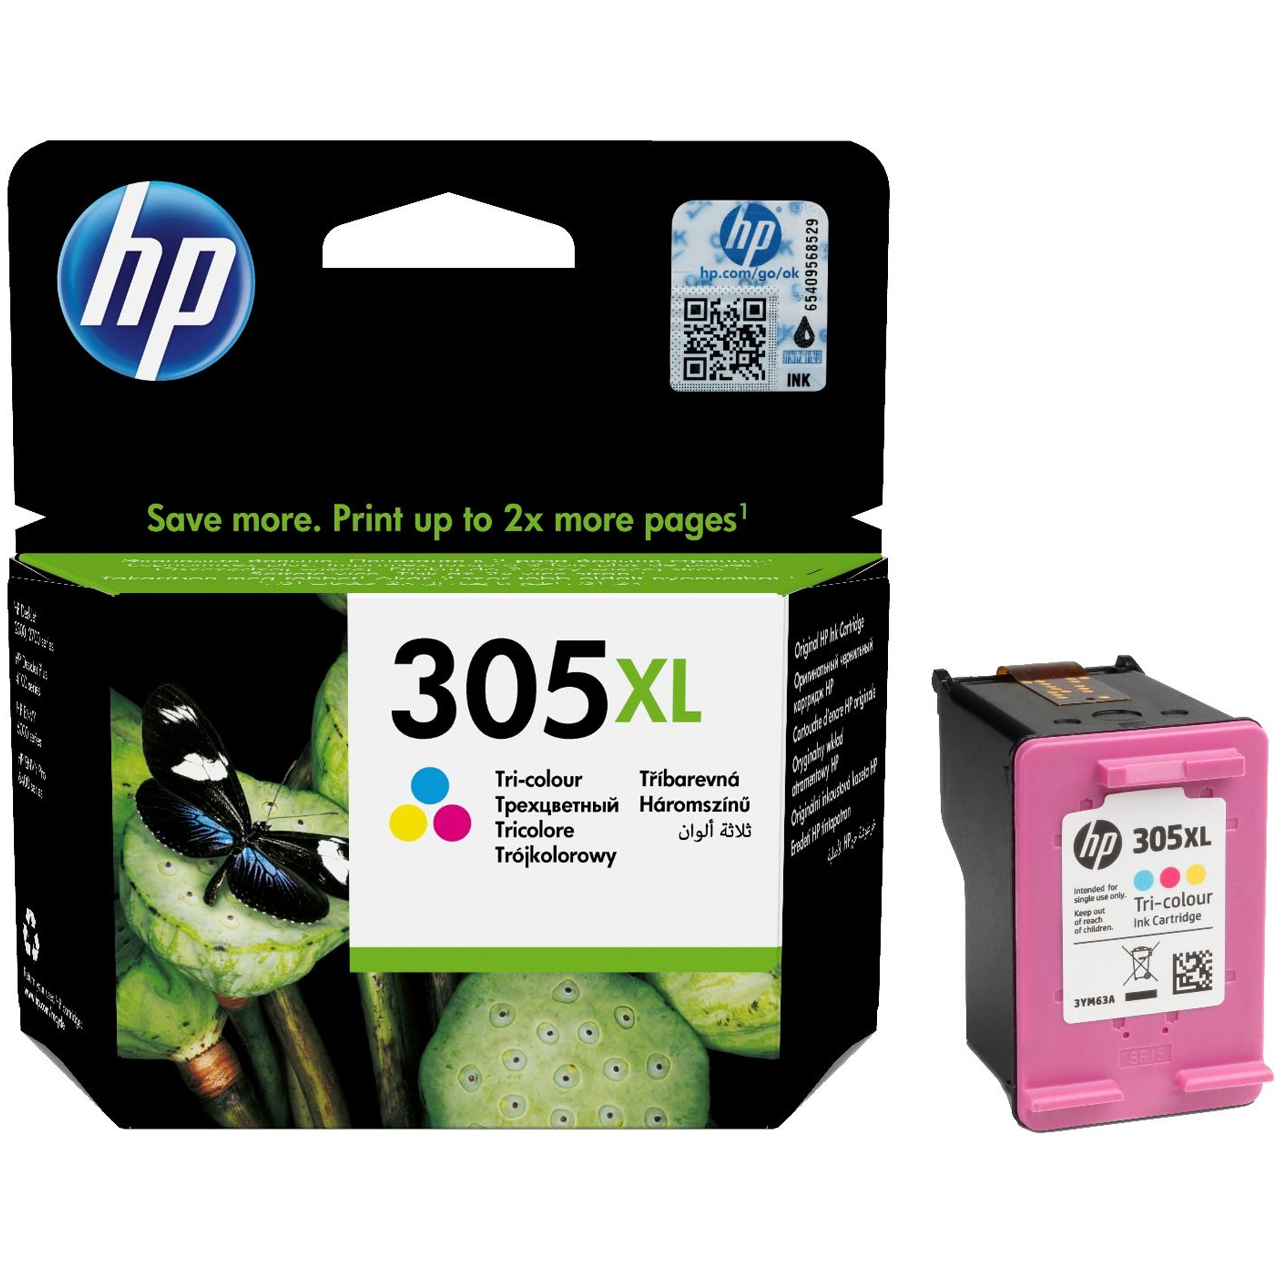 HP 305XL High Capacity Ink Cartridge for  HP Deskjet 2710 2720 4120 Printers